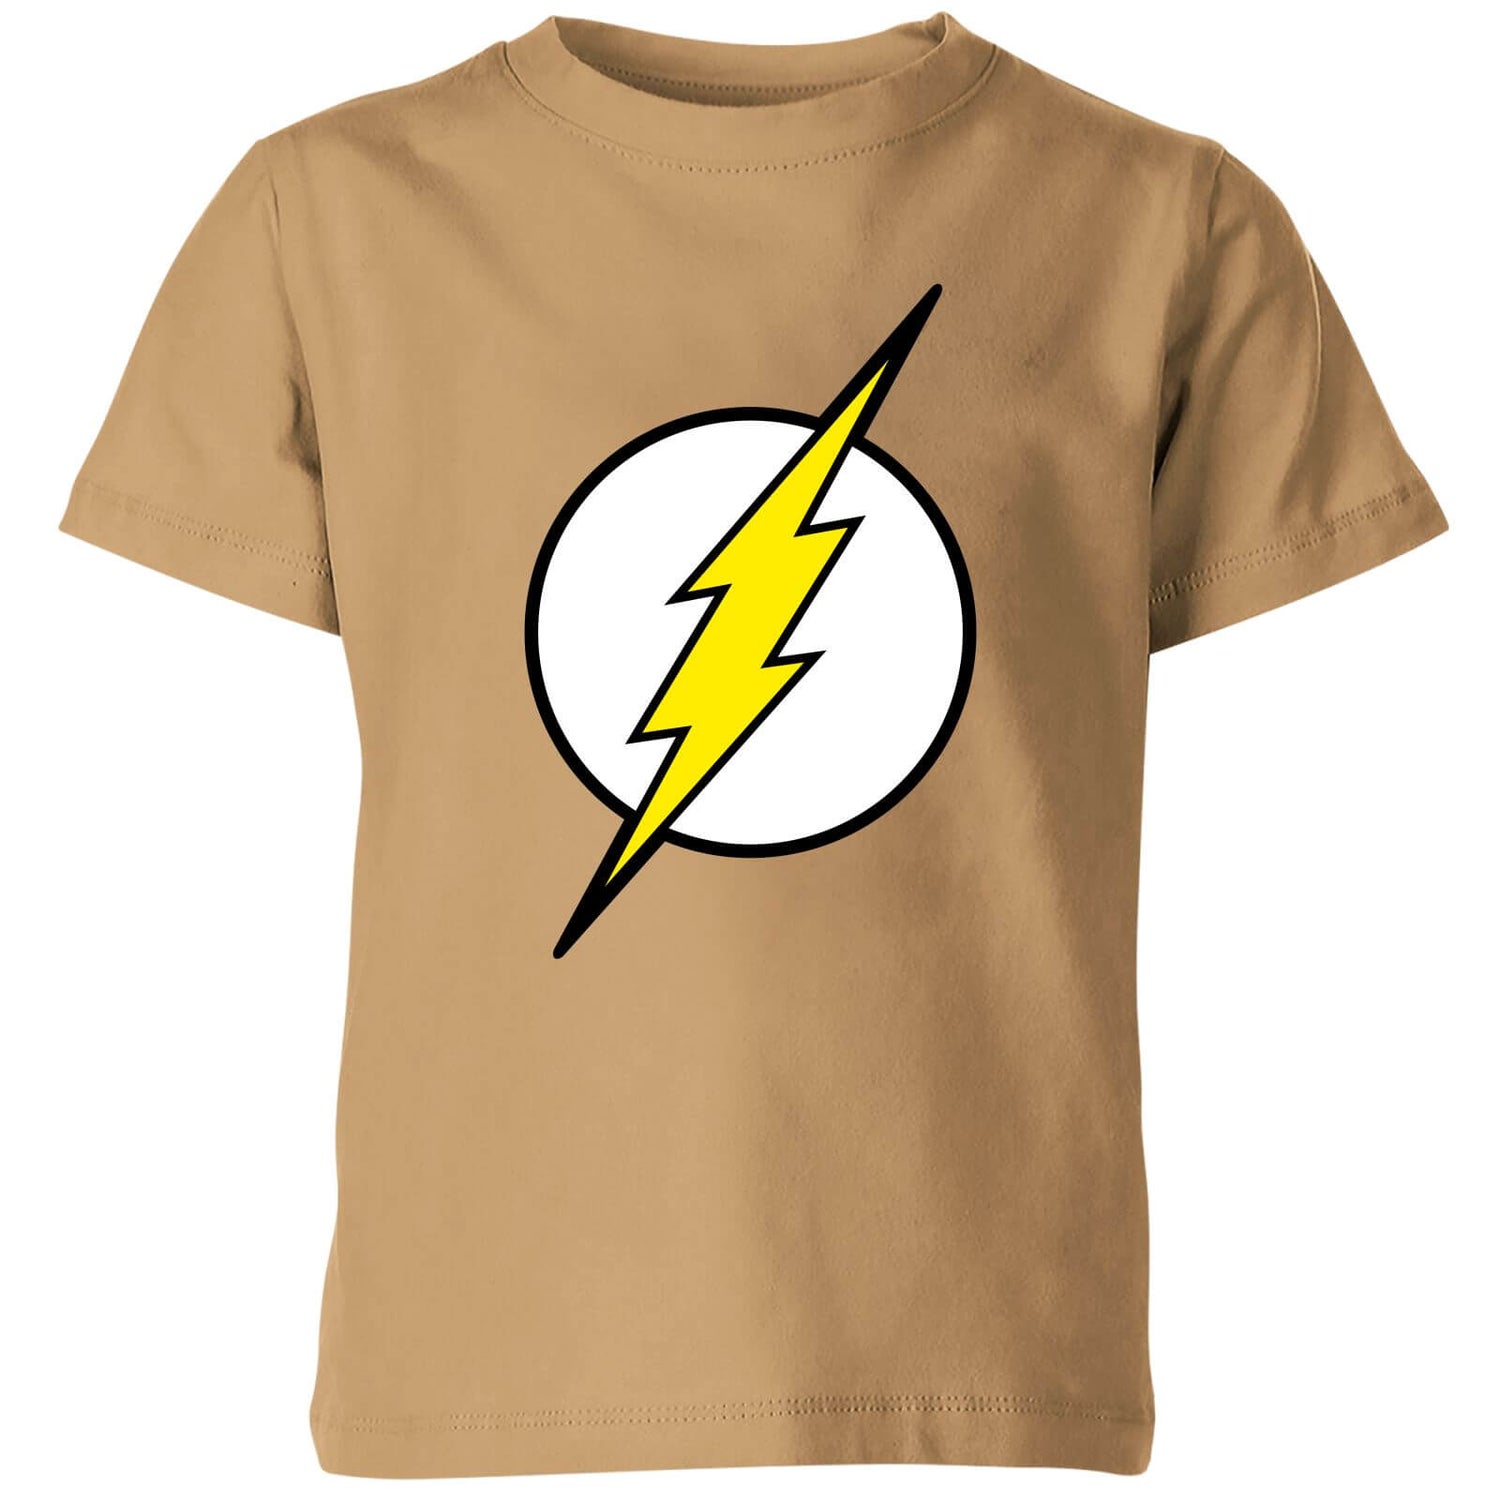 Justice League Flash Logo Kids' T-Shirt - Tan